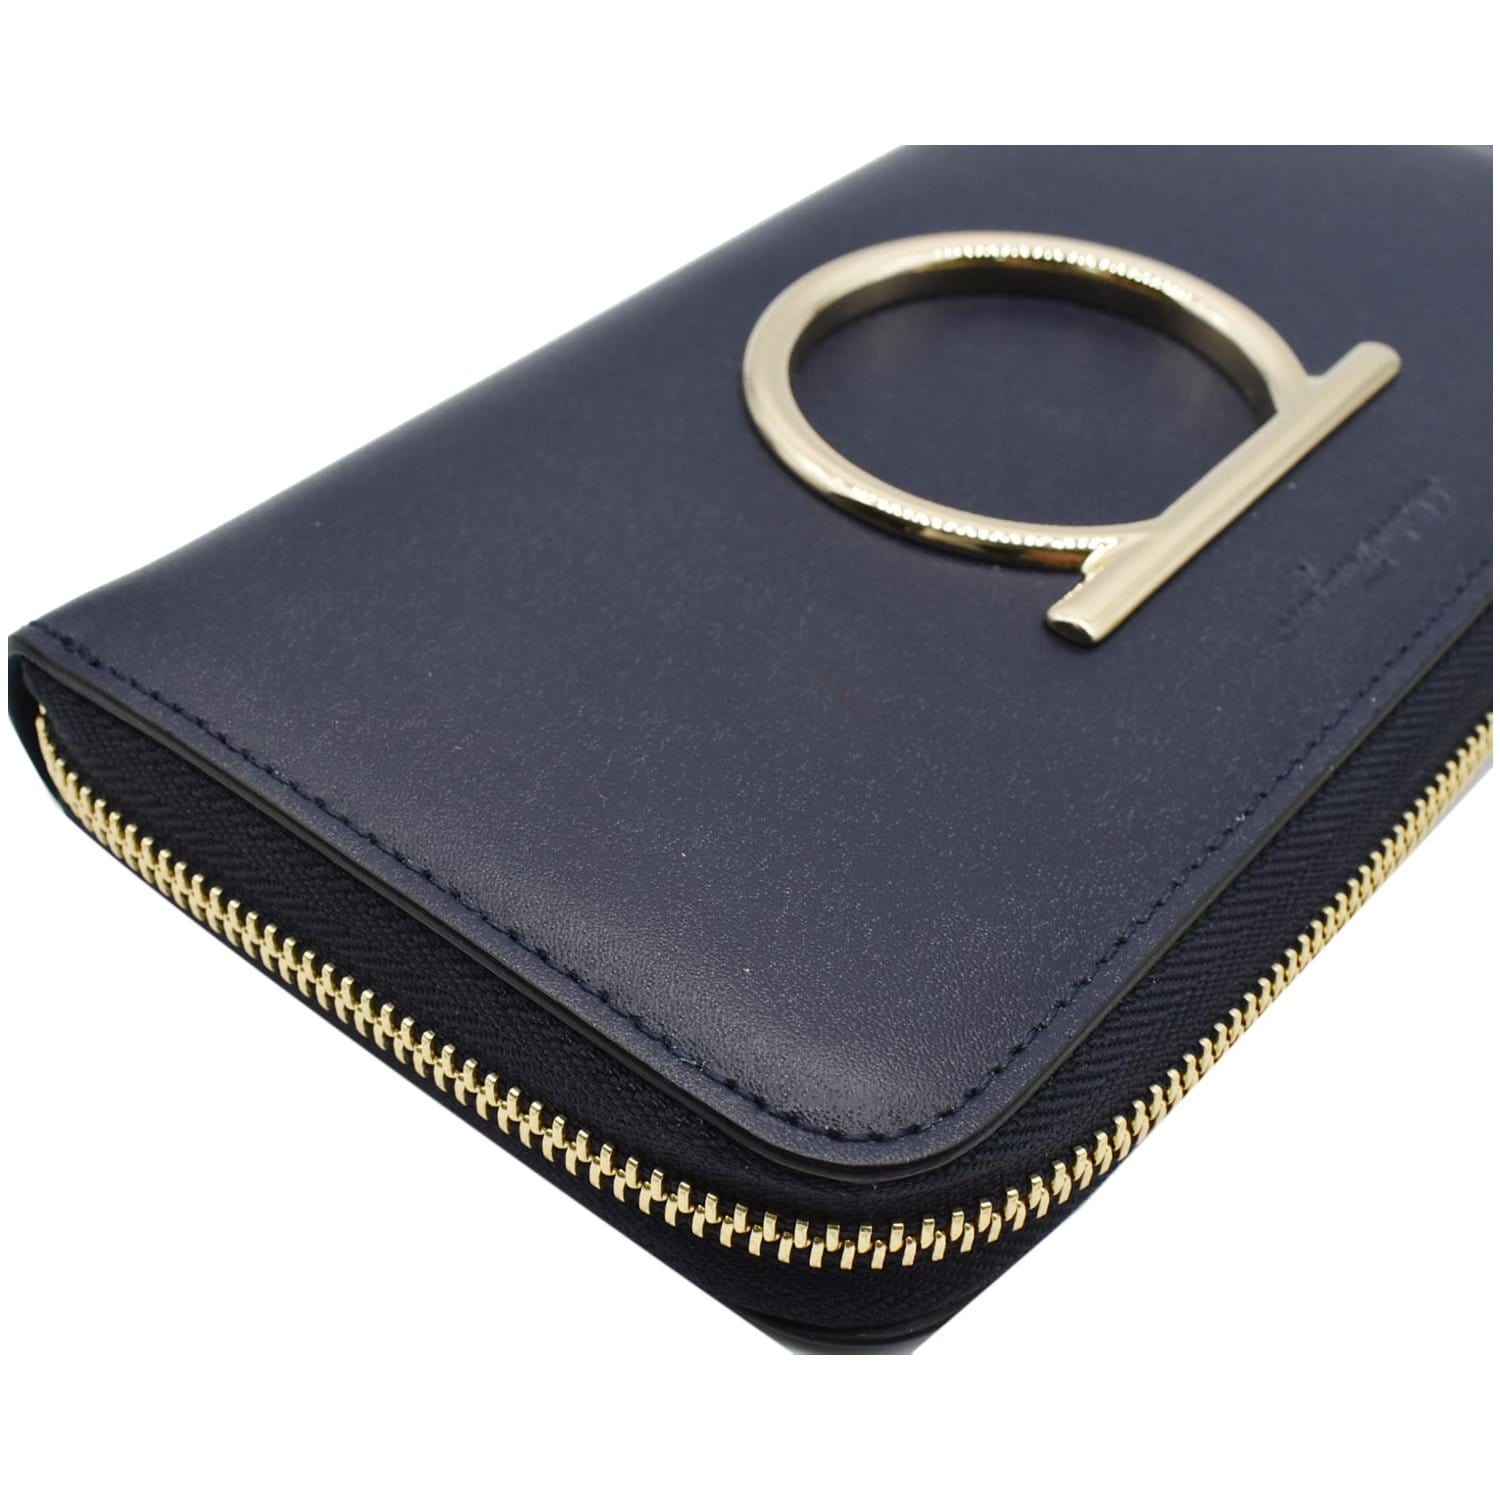 Gancini long leather wallet